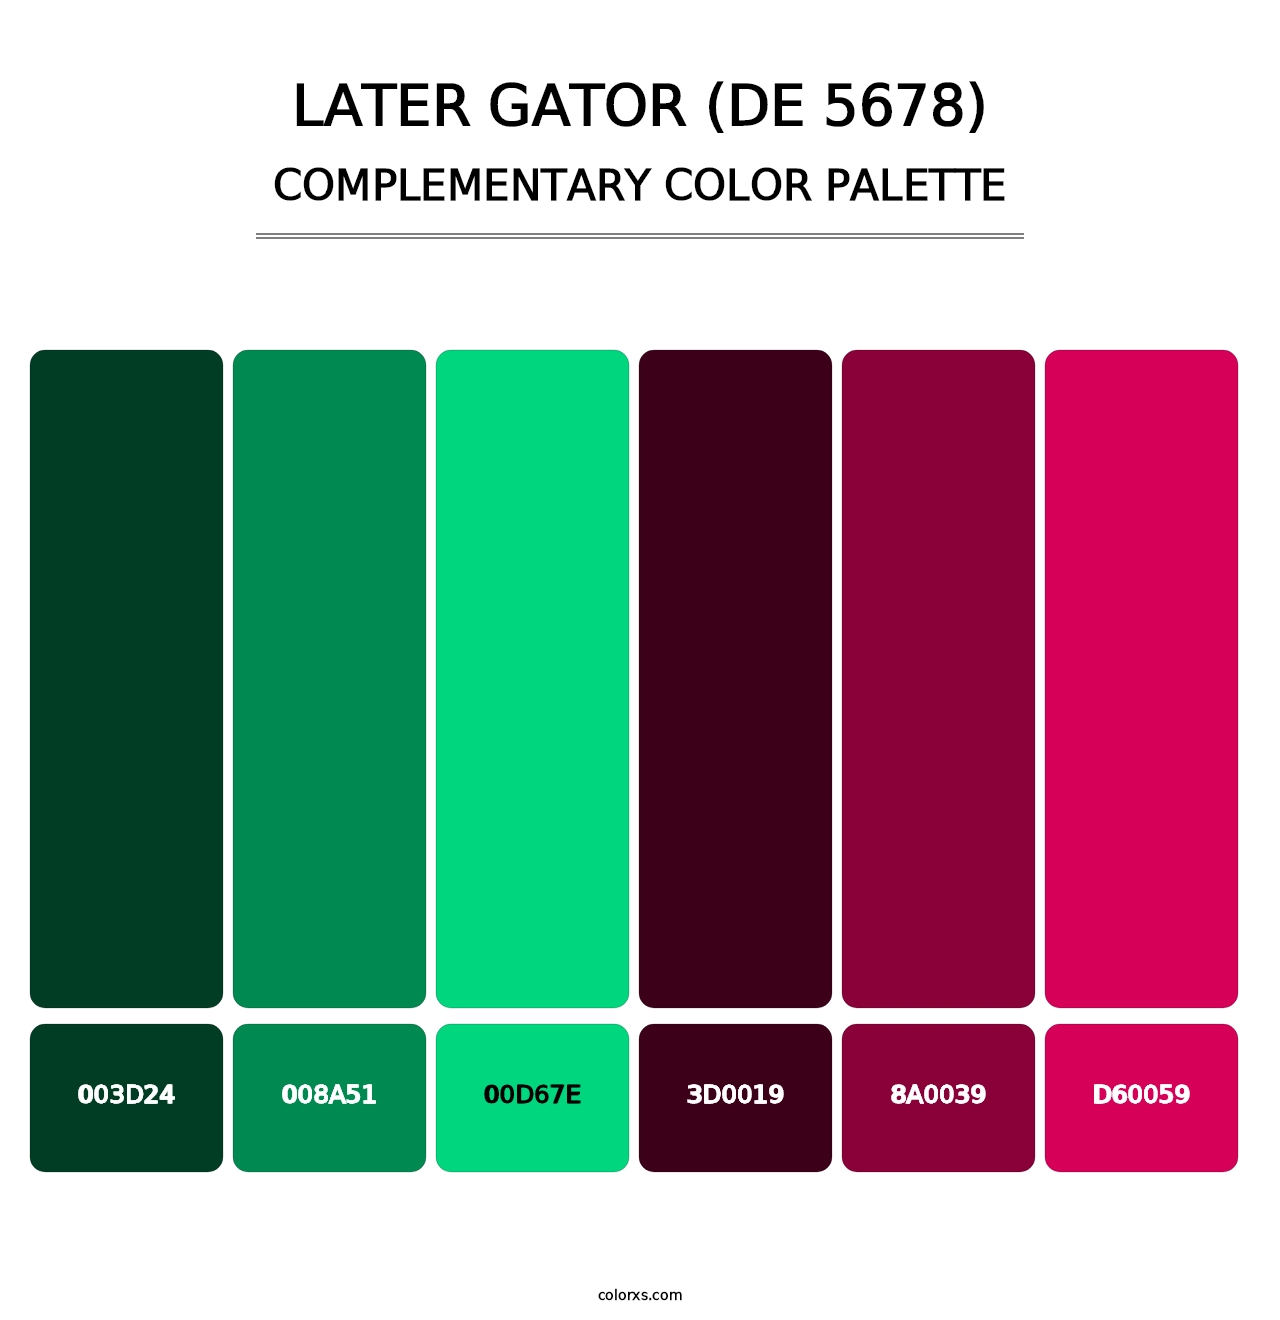 Later Gator (DE 5678) - Complementary Color Palette